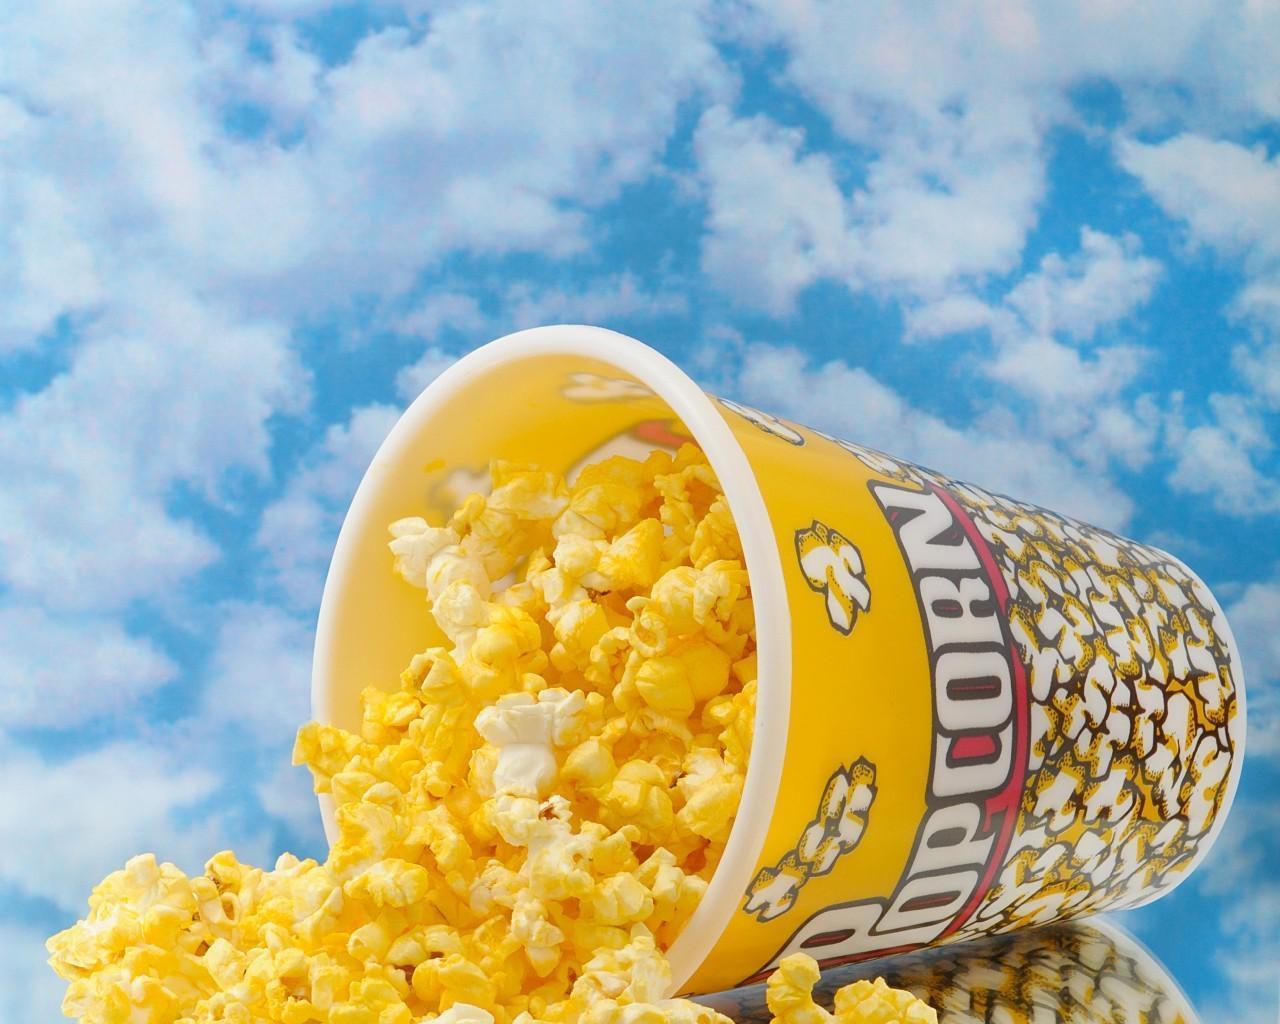 100 Popcorn Pictures  Download Free Images on Unsplash